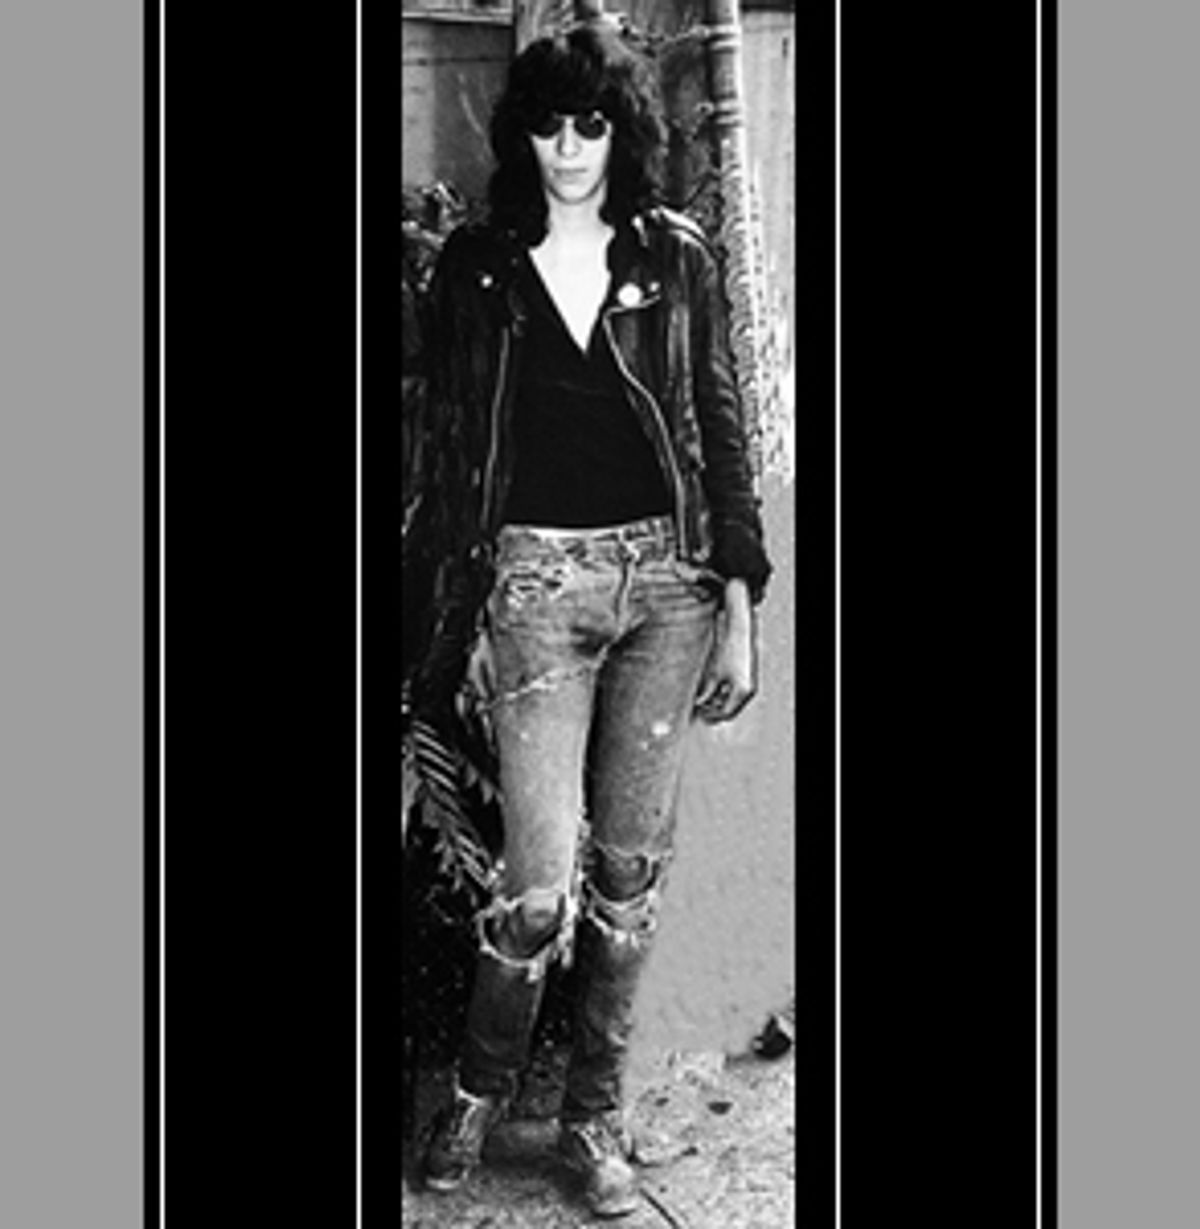 Joey Ramone, R.I.P. | Salon.com